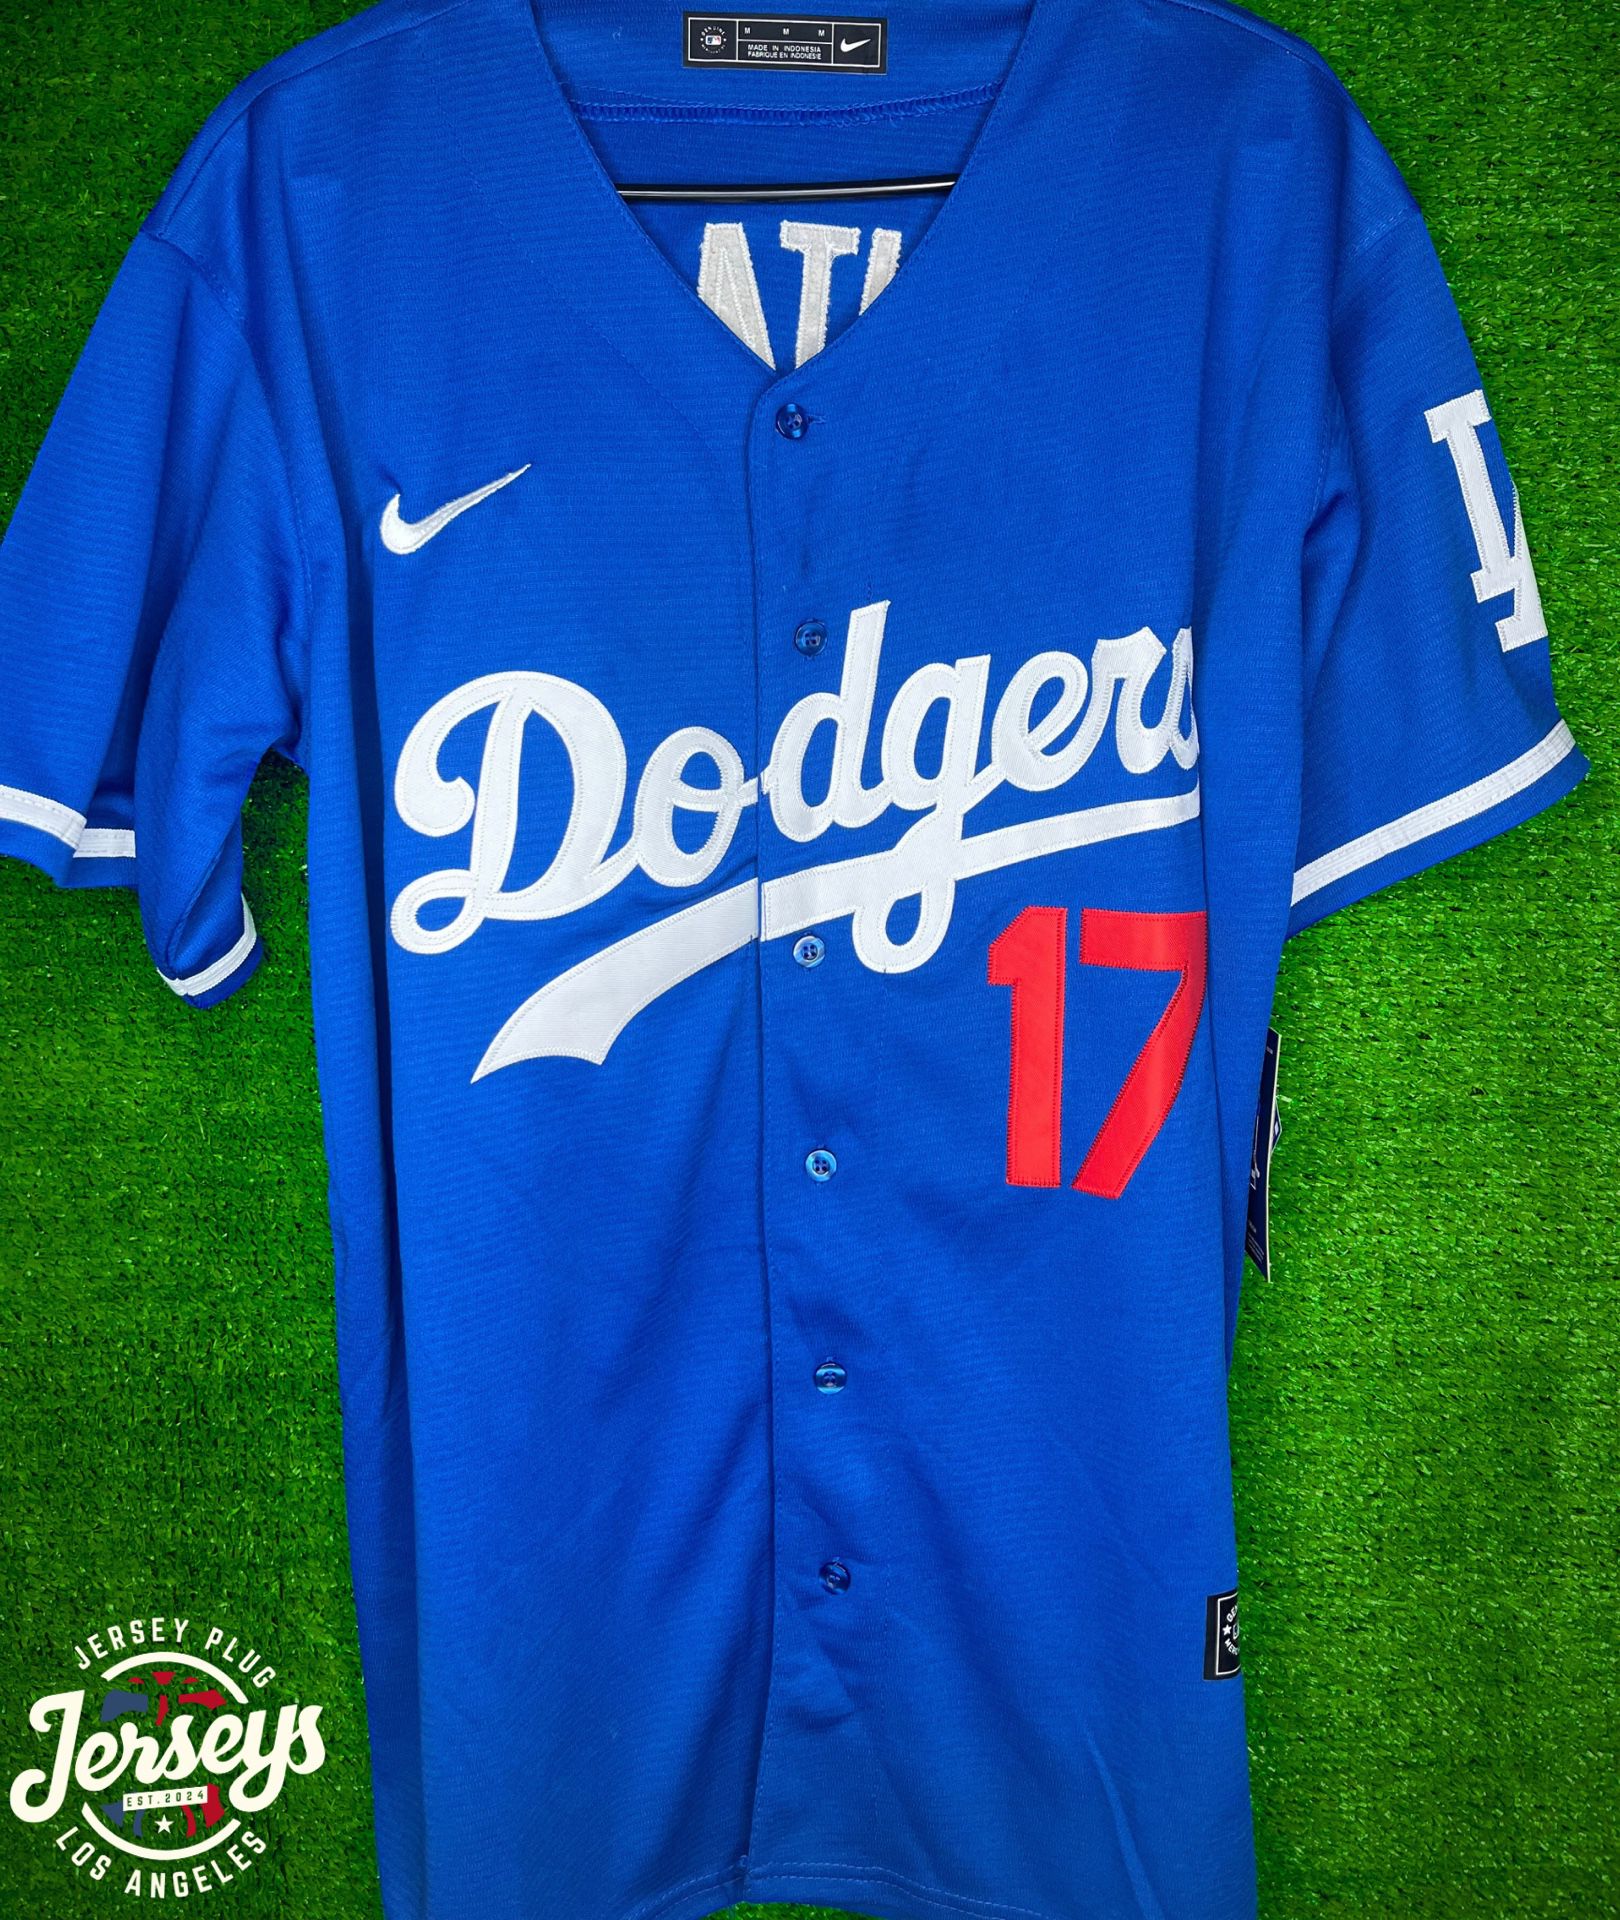 Los Angeles Dodgers Shohei Ohtani Jersey